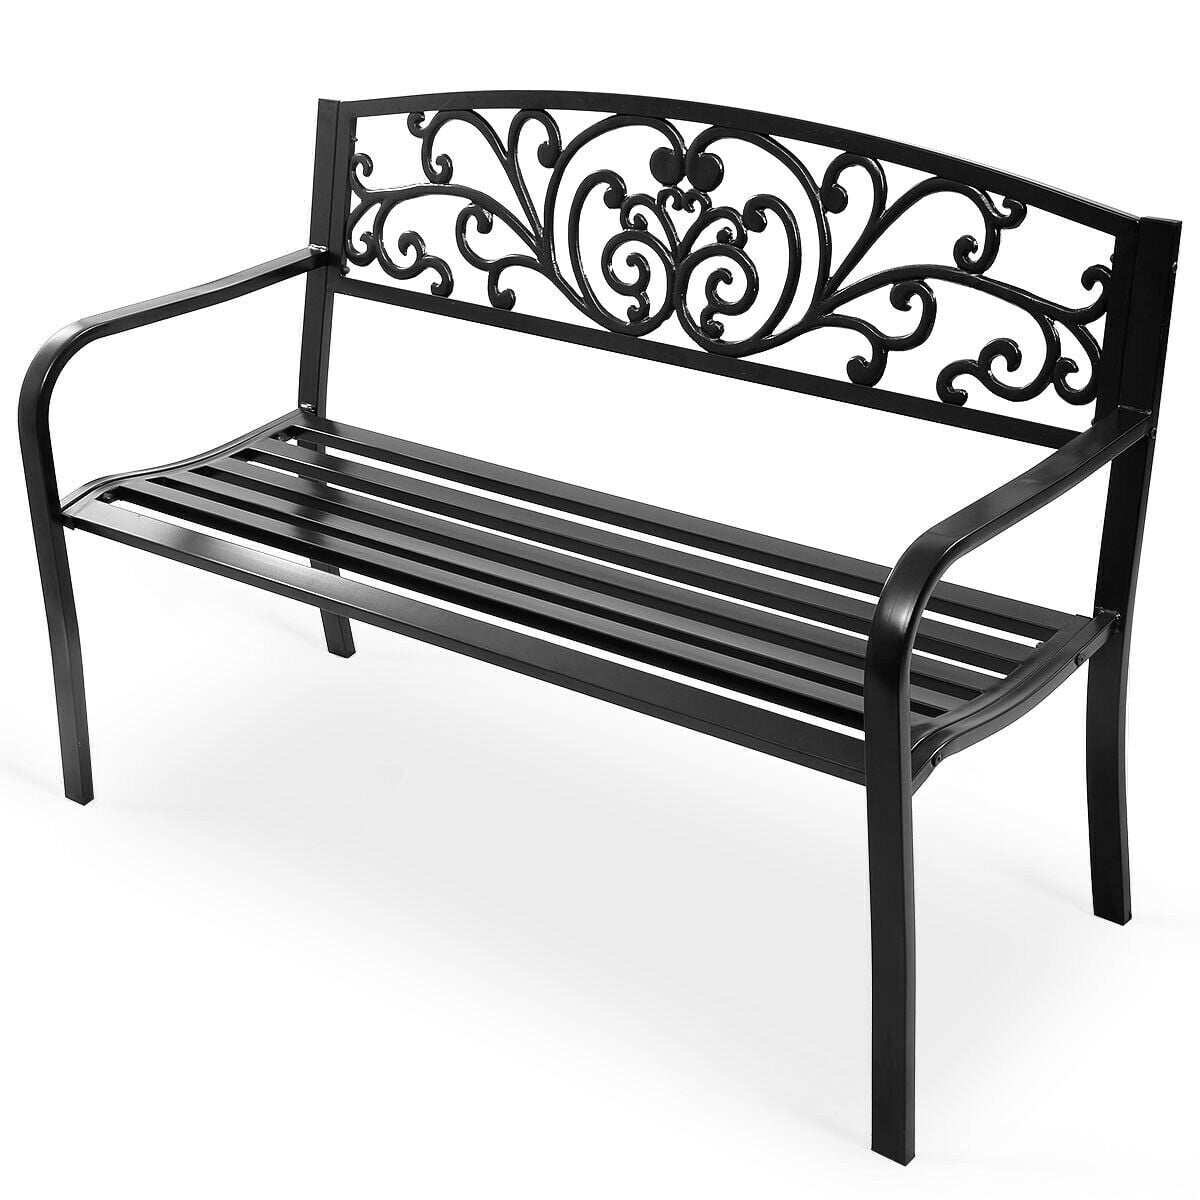 44.5 "  Garden Bench Porch Patio Park Furniture Iron School Lawn Seat Chair NEW 